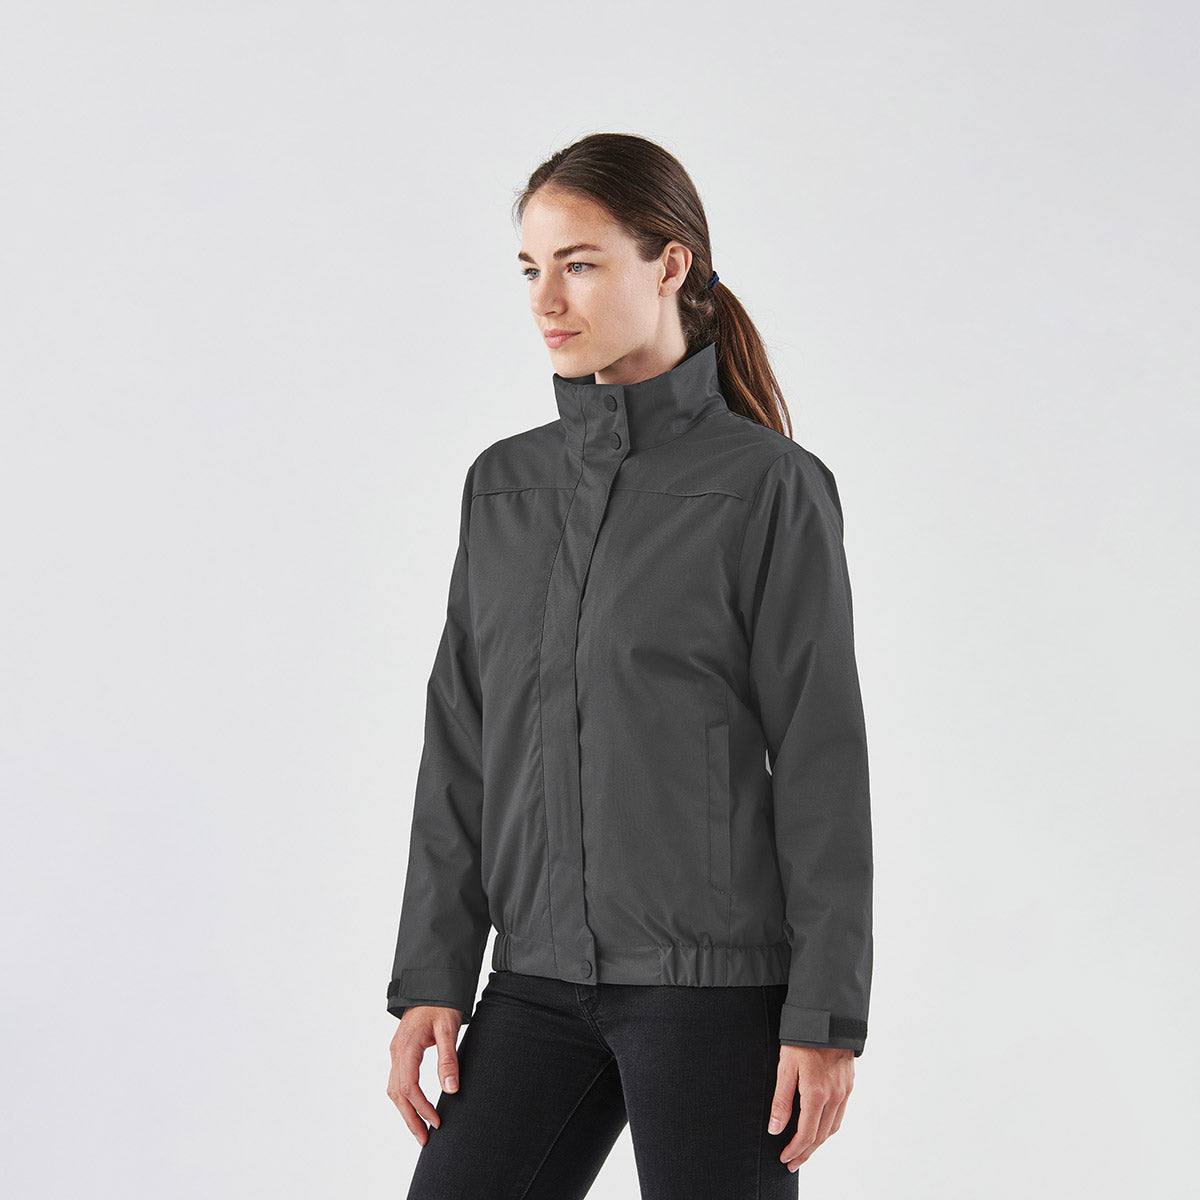 Women's Polar HD 3-in-1 System Jacket - Stormtech USA Retail